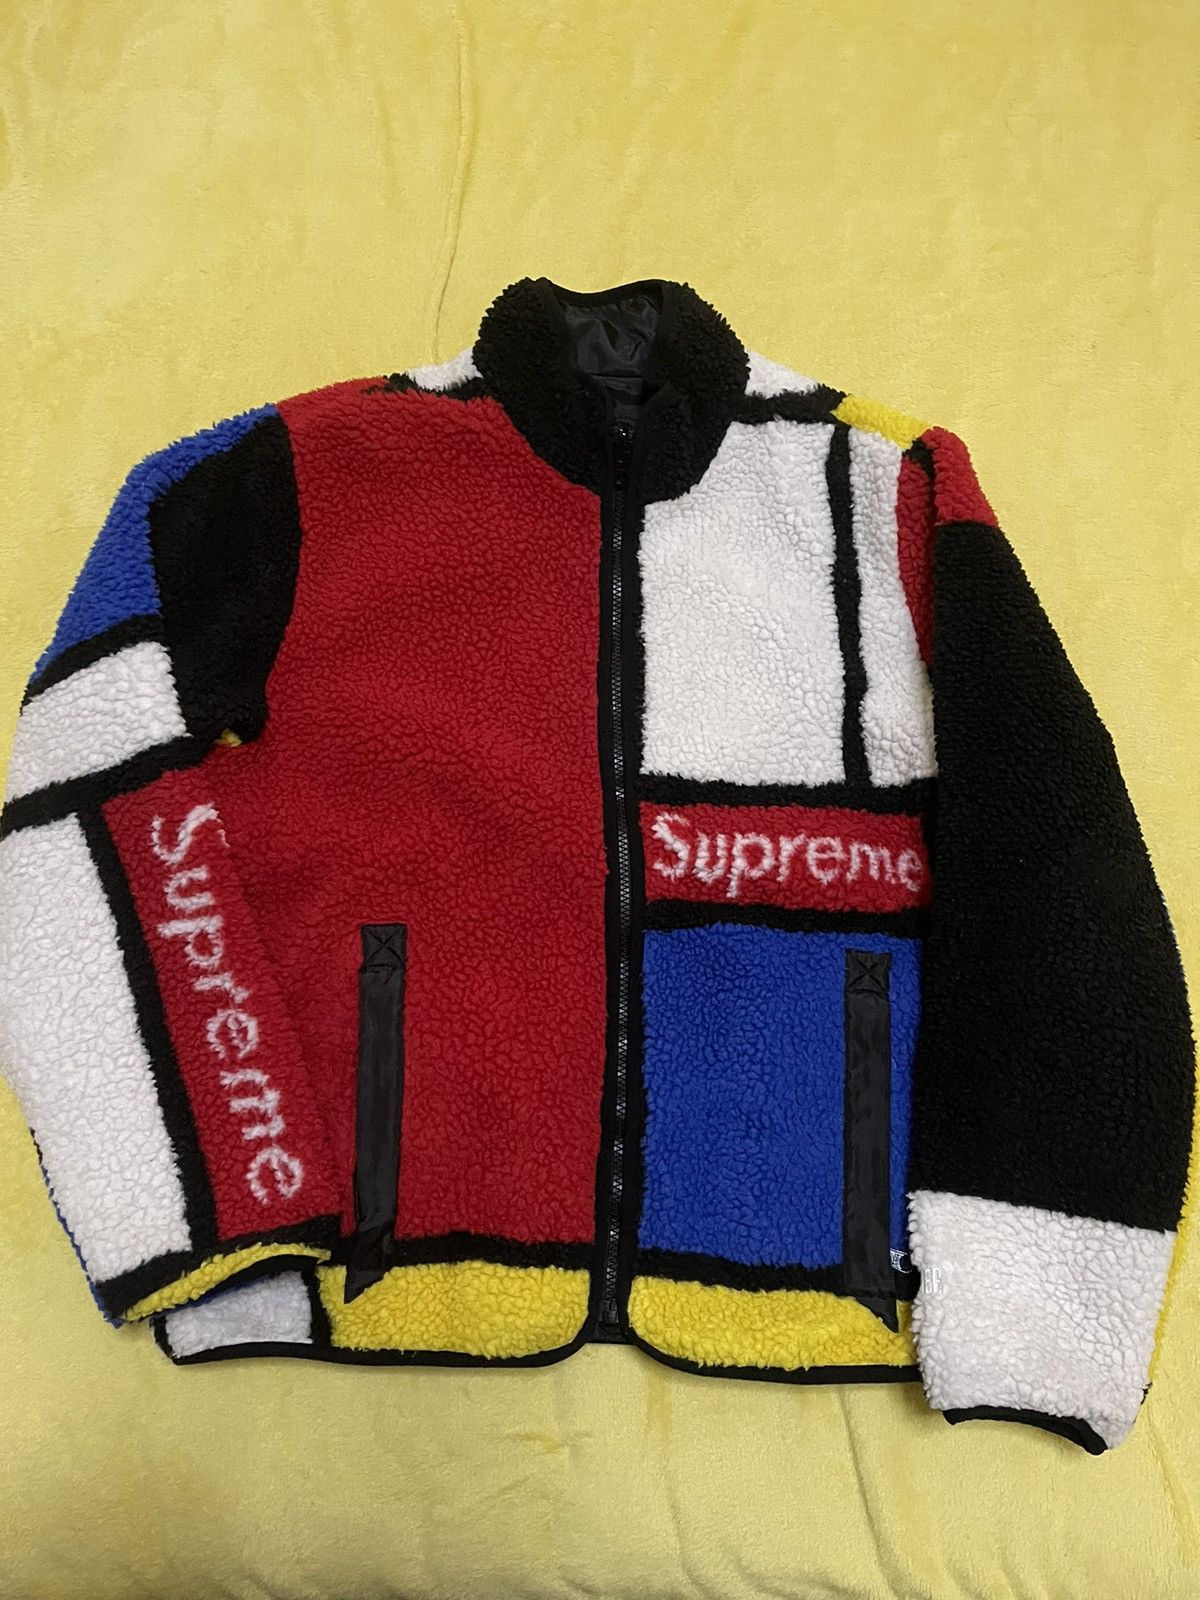 Supreme Supreme reversible colorblocked fleece Jacket | Grailed